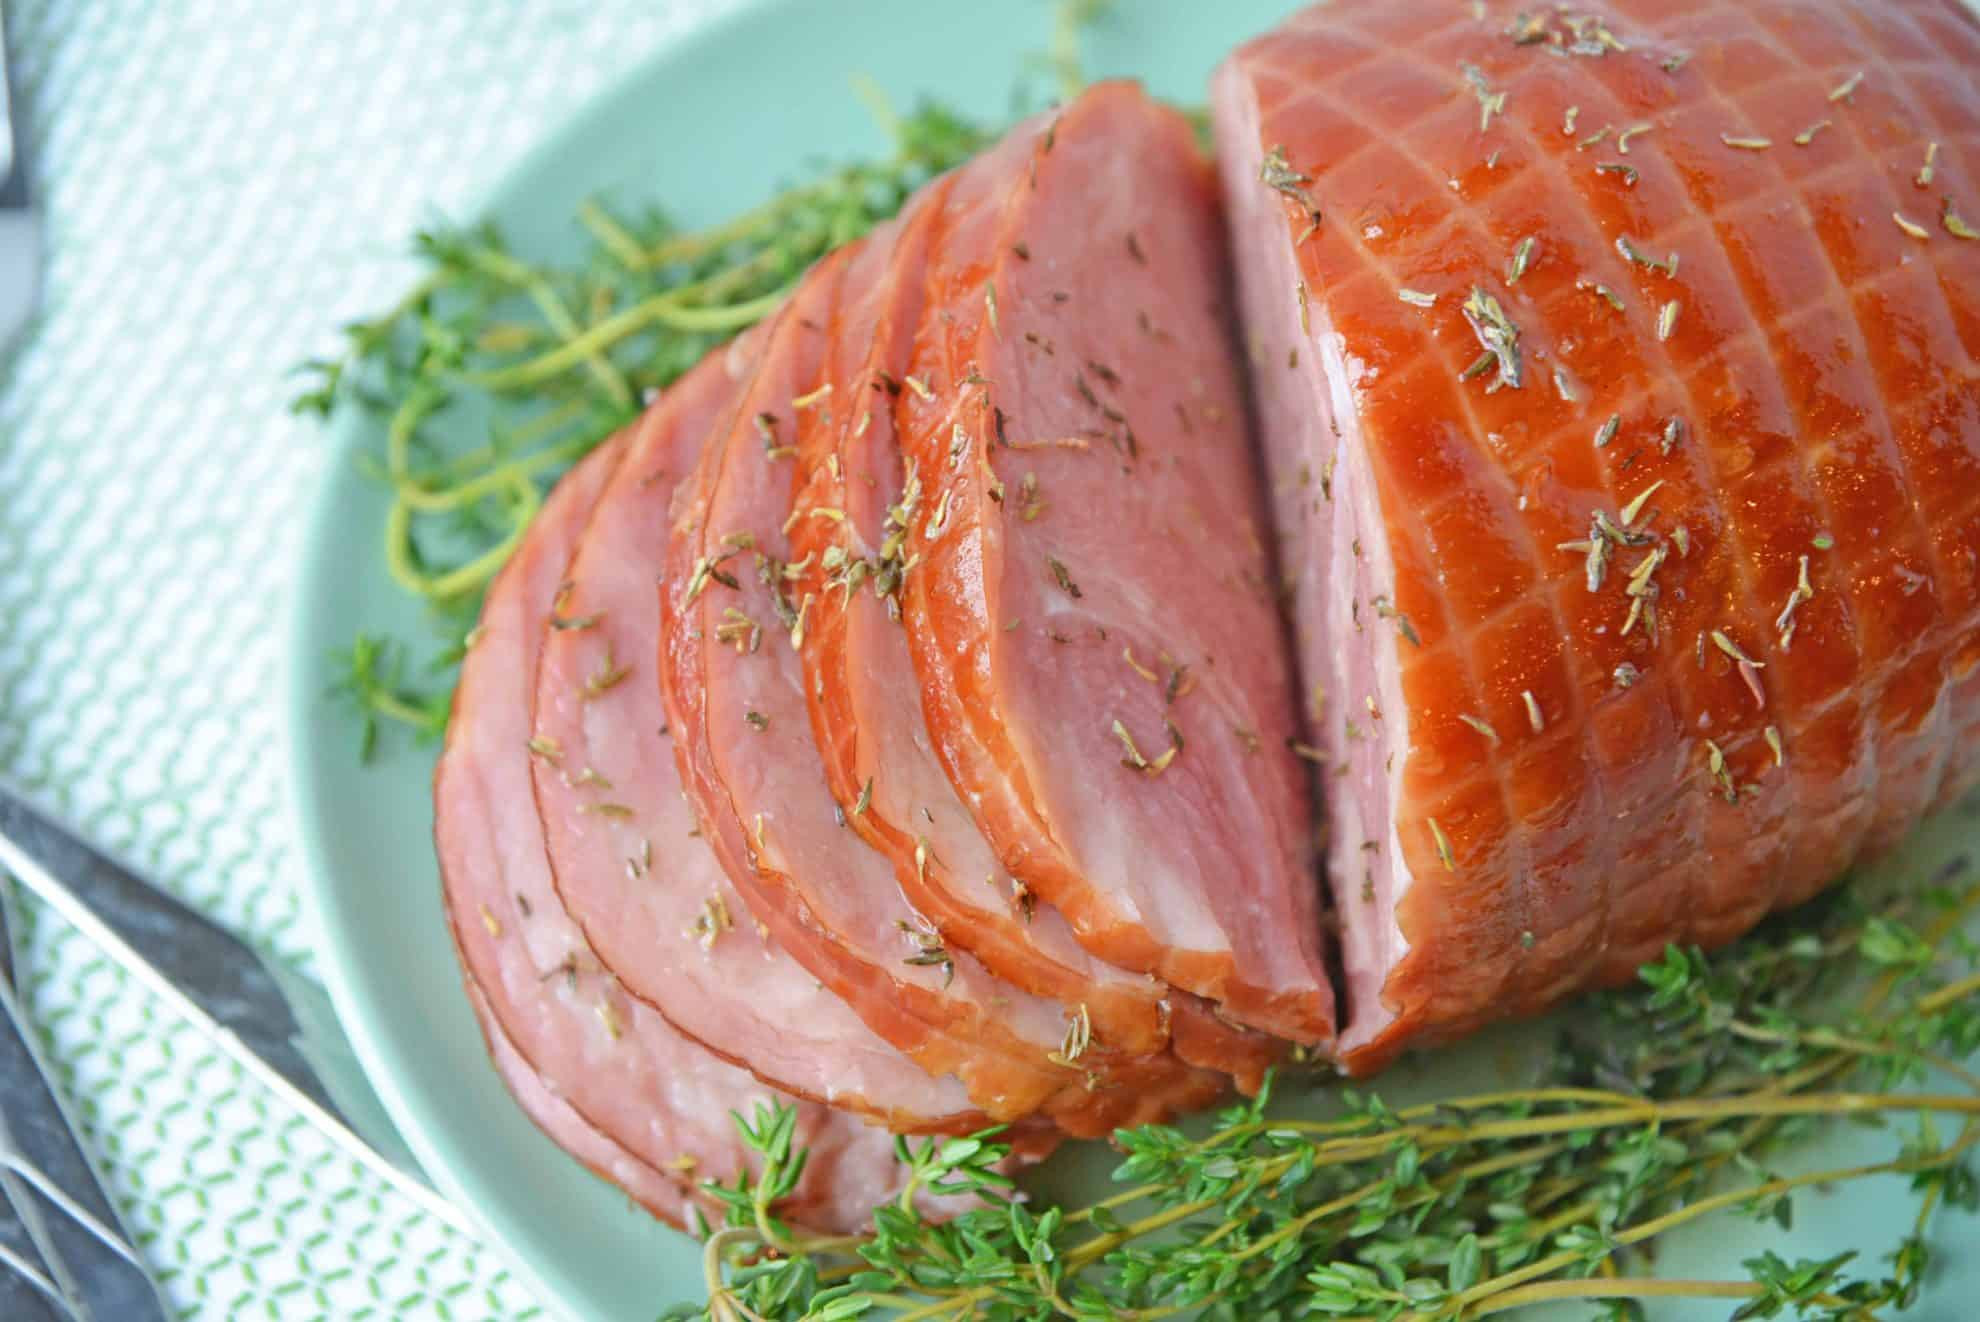 Why Do People Eat Ham On Easter
 Thyme Honey Baked Ham